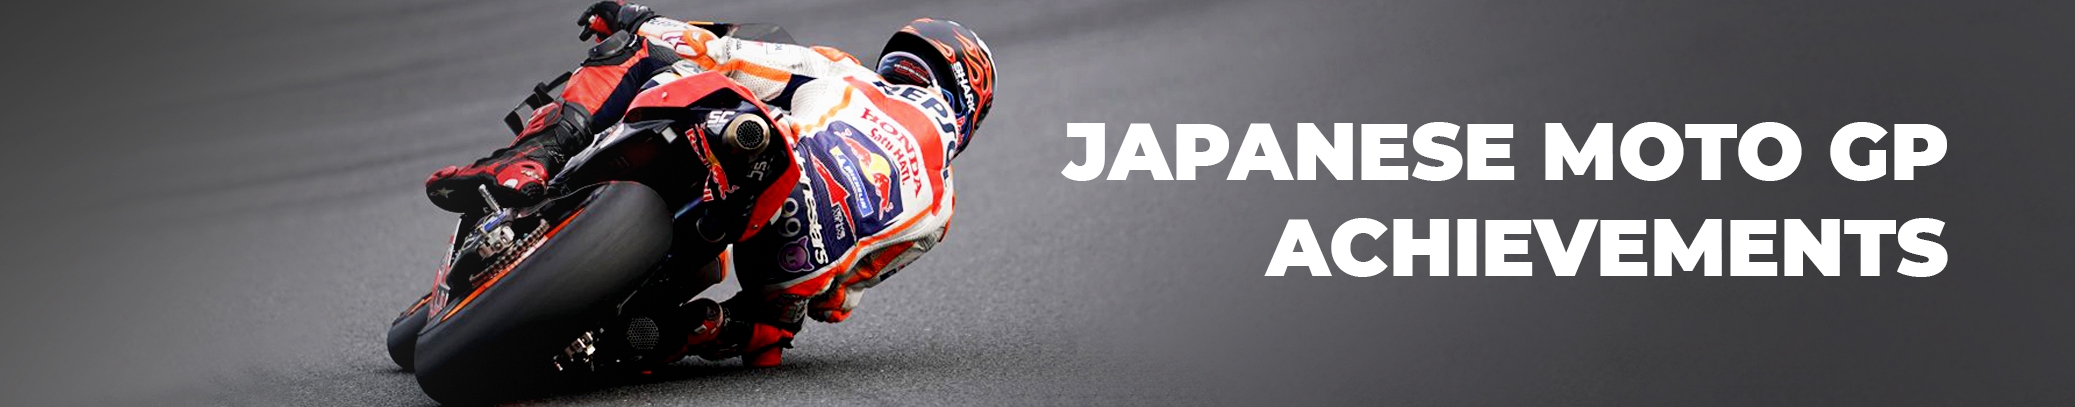 Japanese Moto GP achievements